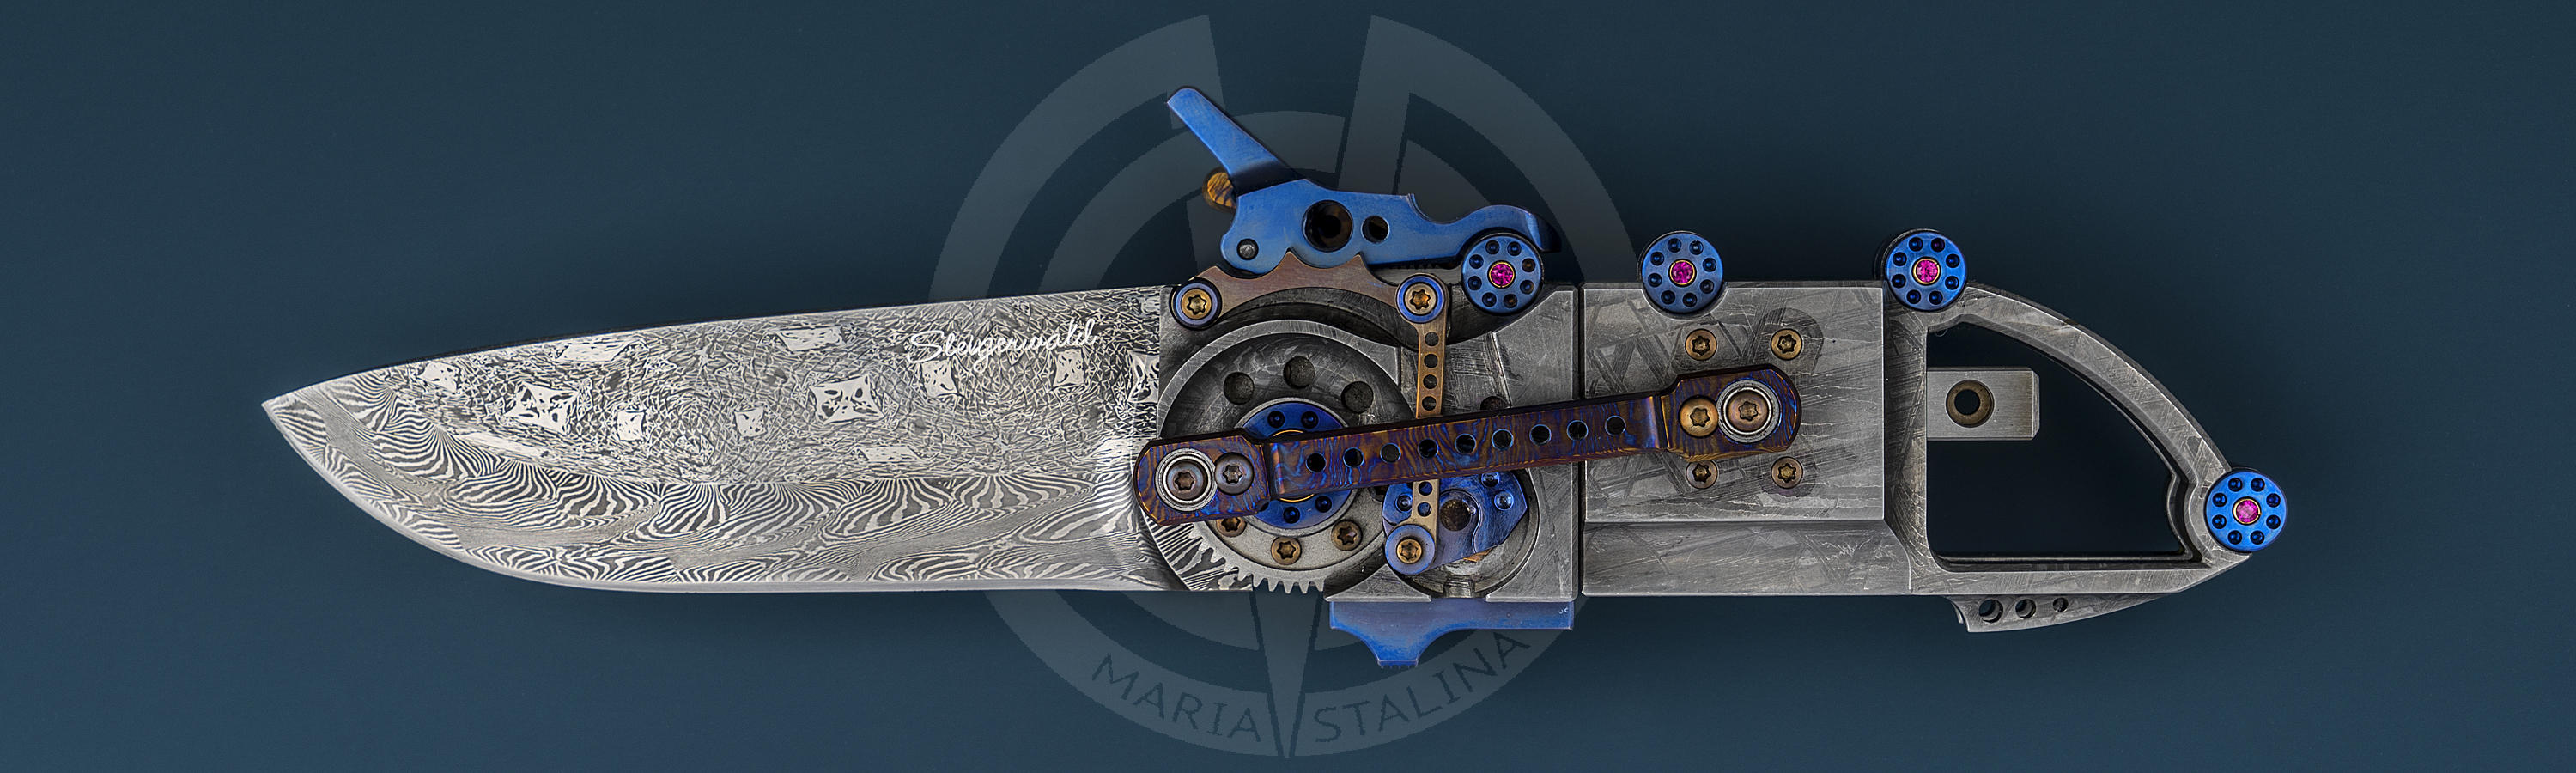 Steampunk Spall Electra meteorite knife